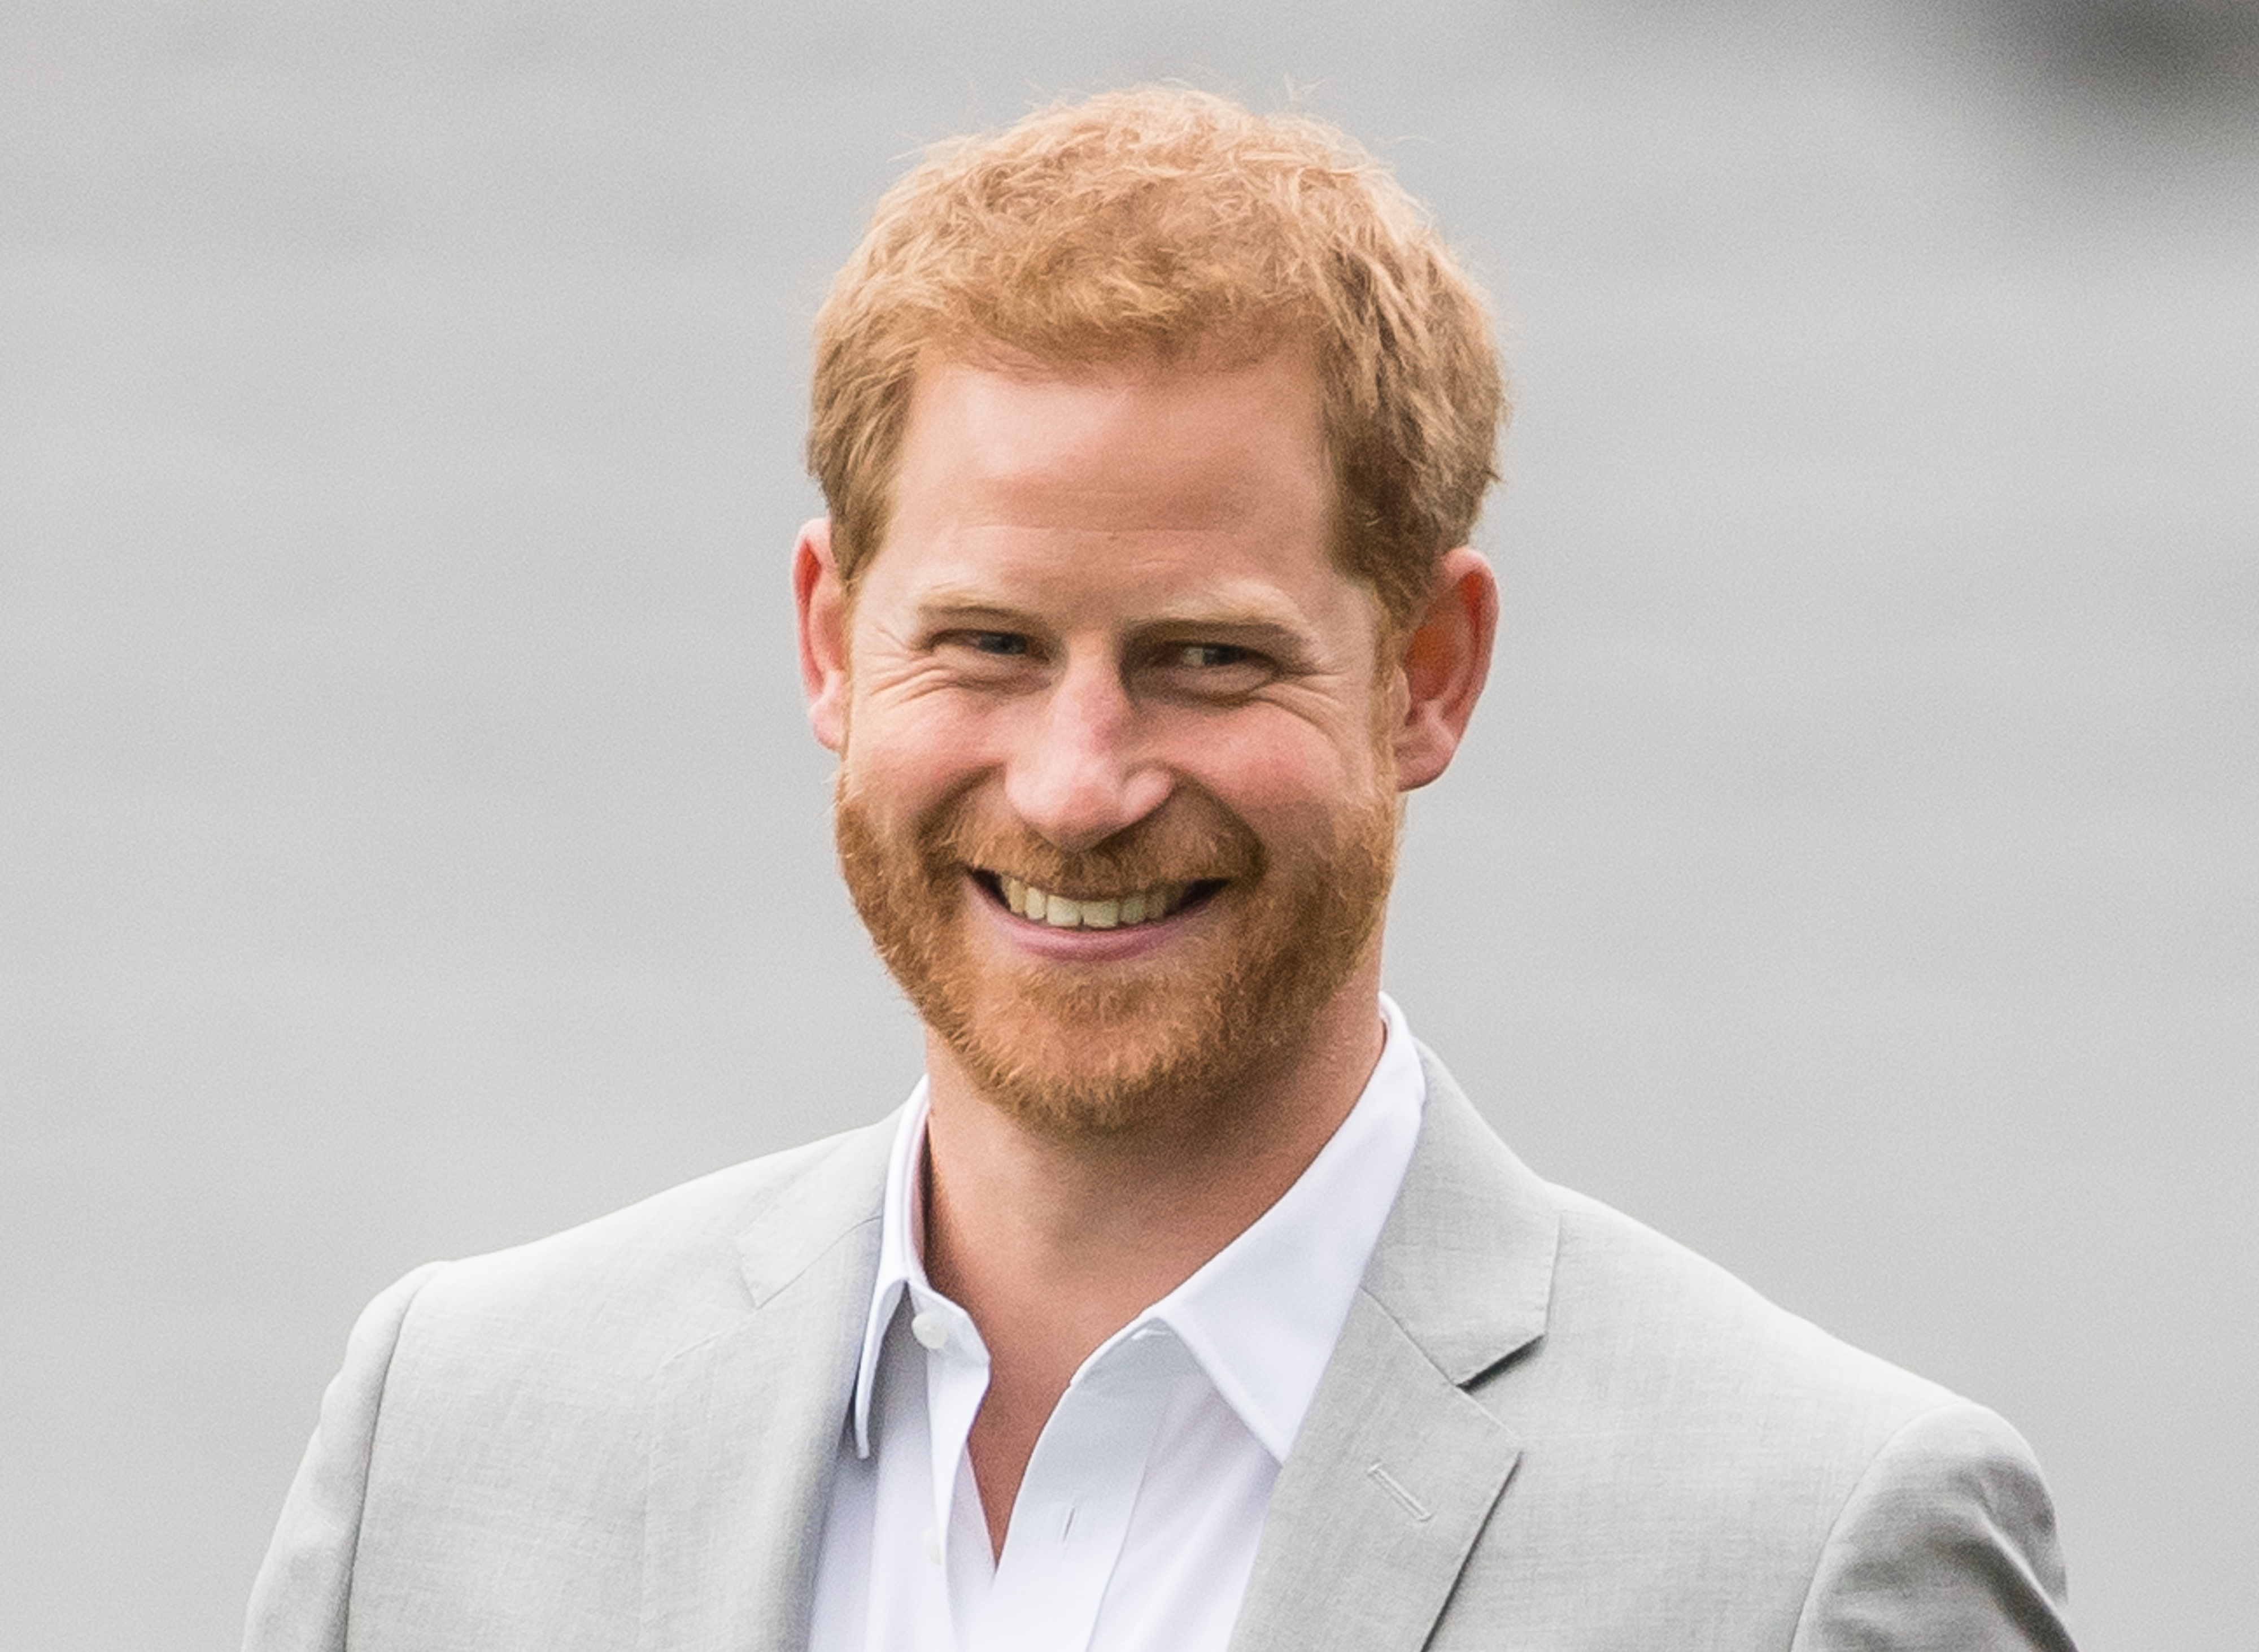 Prinz Harry am 11. Juli 2018 in Dublin, Irland | Quelle: Getty Images